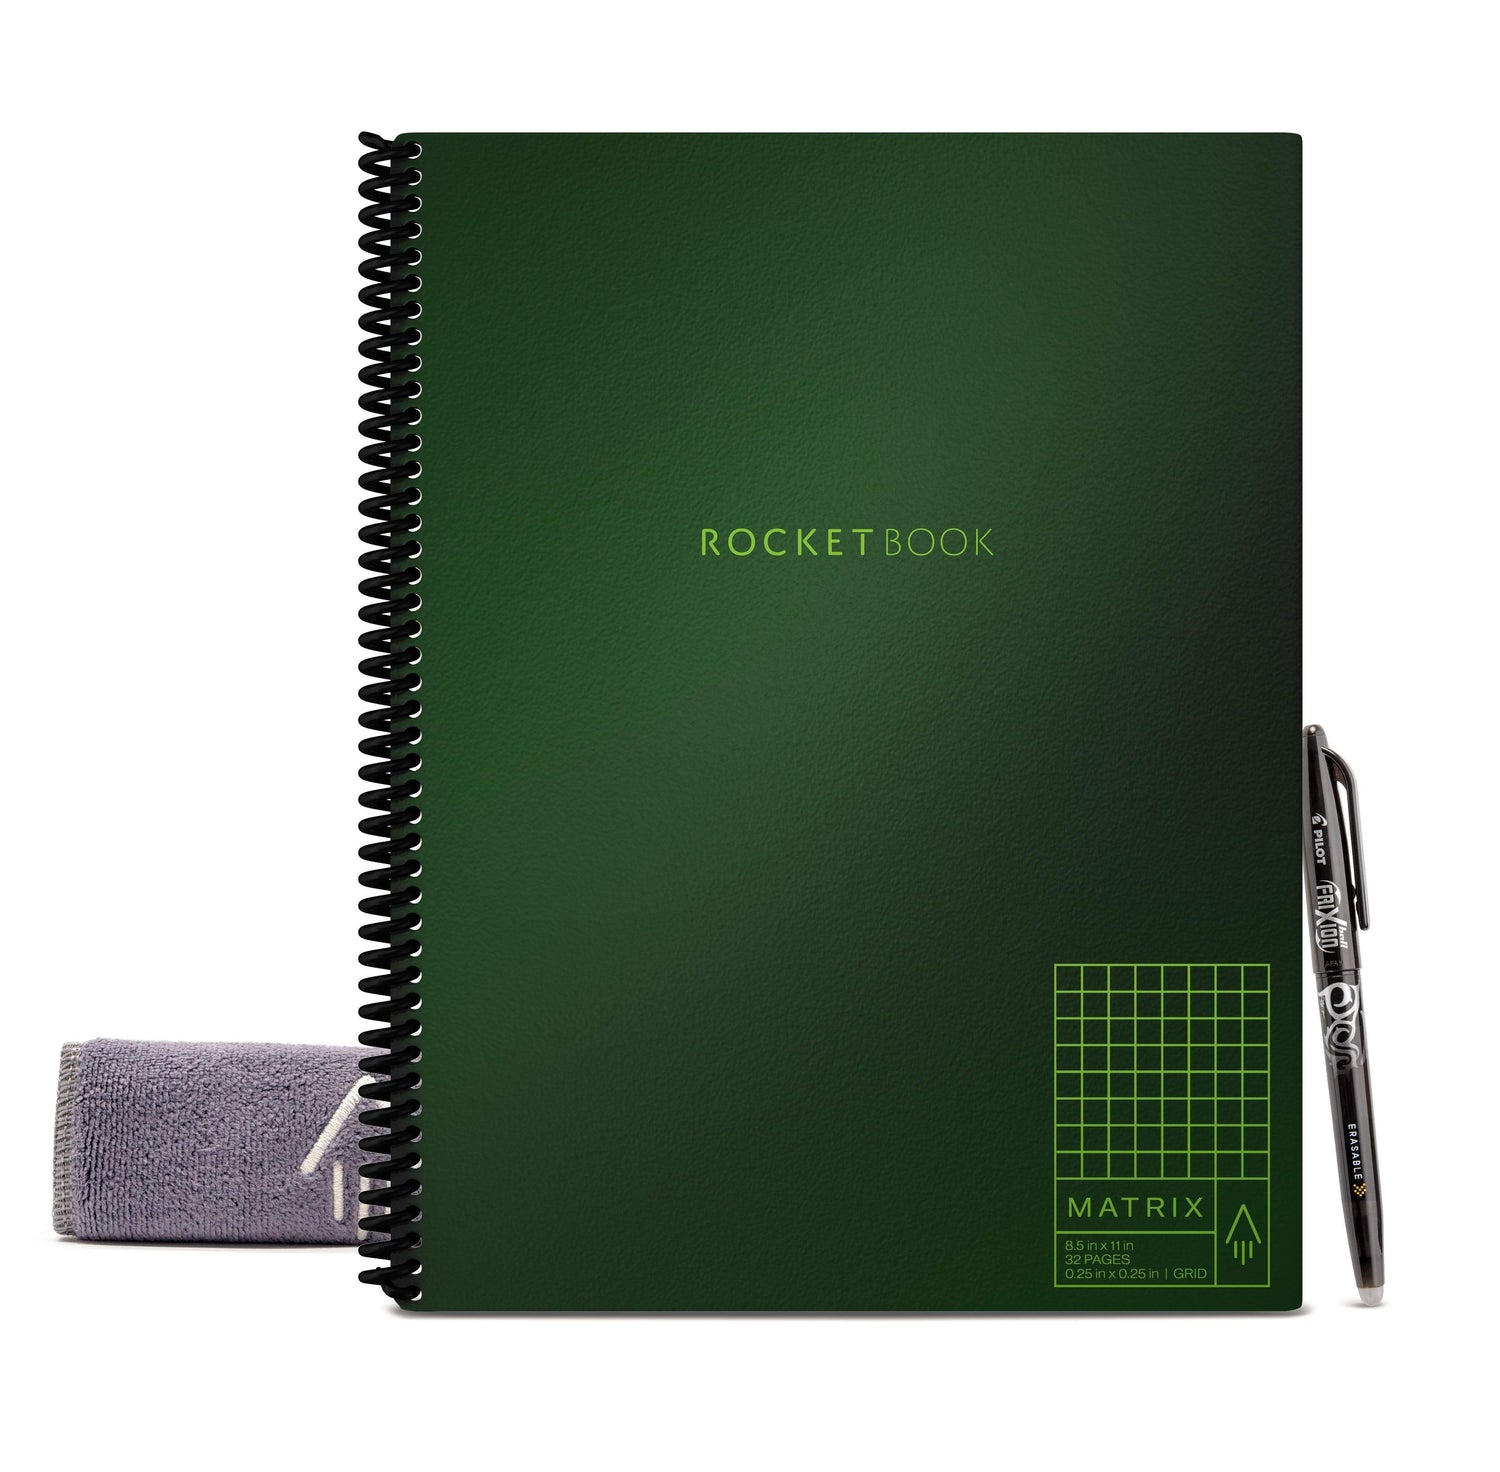 Rocketbook Matrix notebook